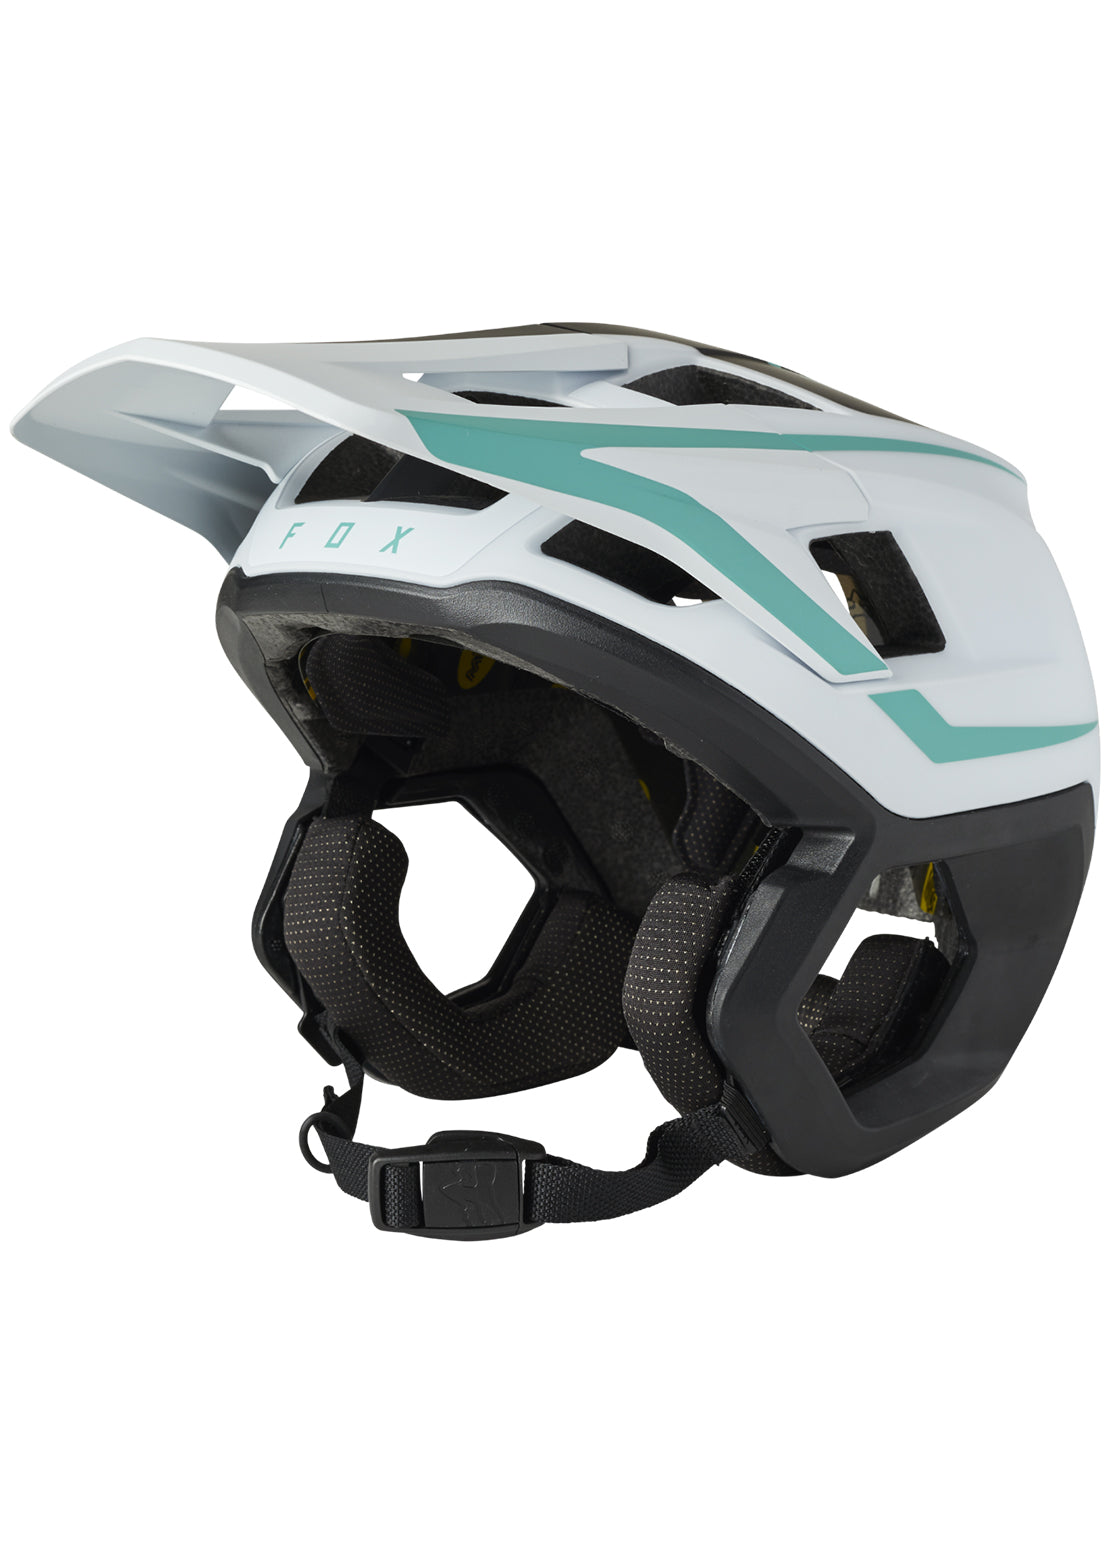 Fox Dropframe Pro Graphic 2 Mountain Bike Helmet Teal